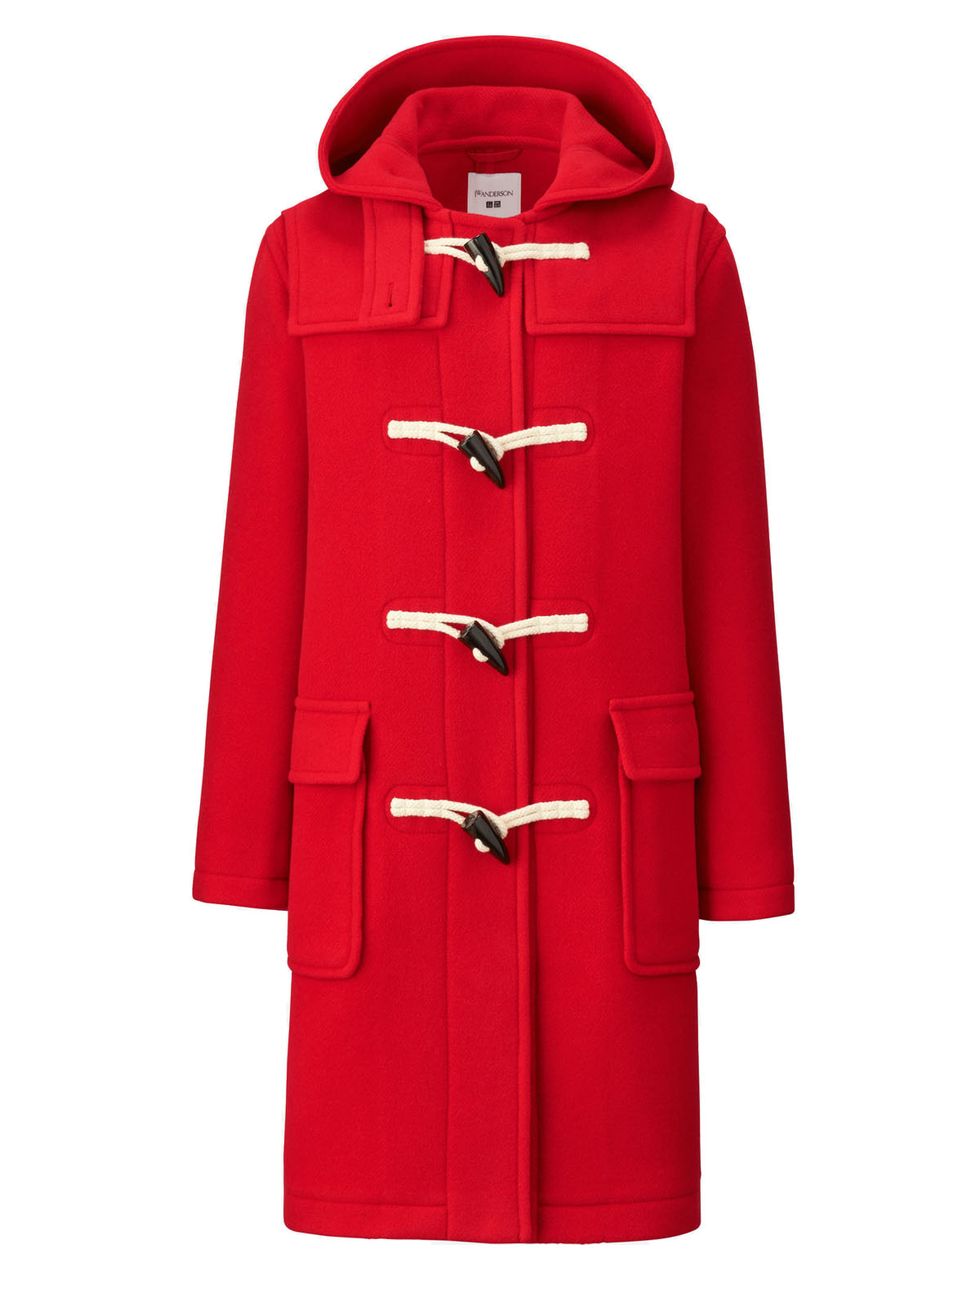 Clothing, Outerwear, Red, Coat, Sleeve, Hood, Overcoat, Jacket, Trench coat, Parka, 